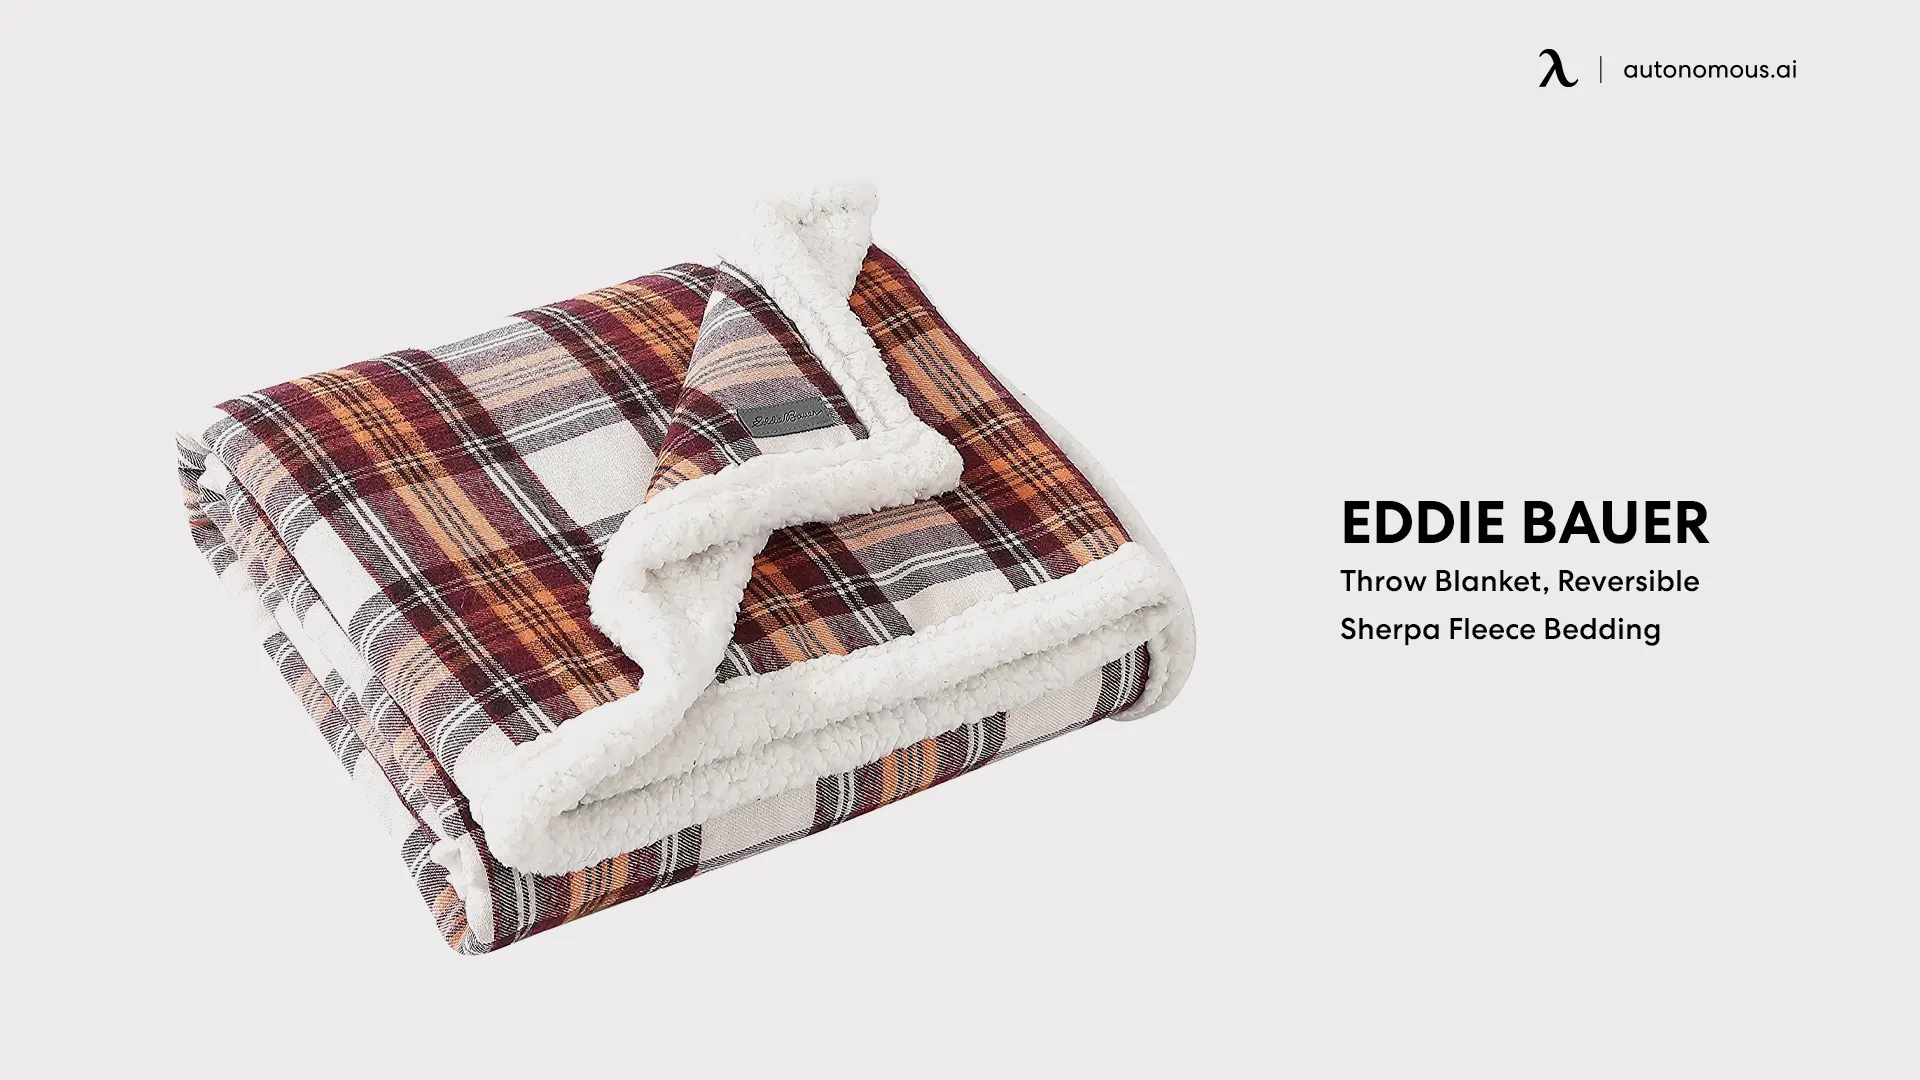 Eddie Bauer - Throw Blanket, Reversible Sherpa Fleece Bedding